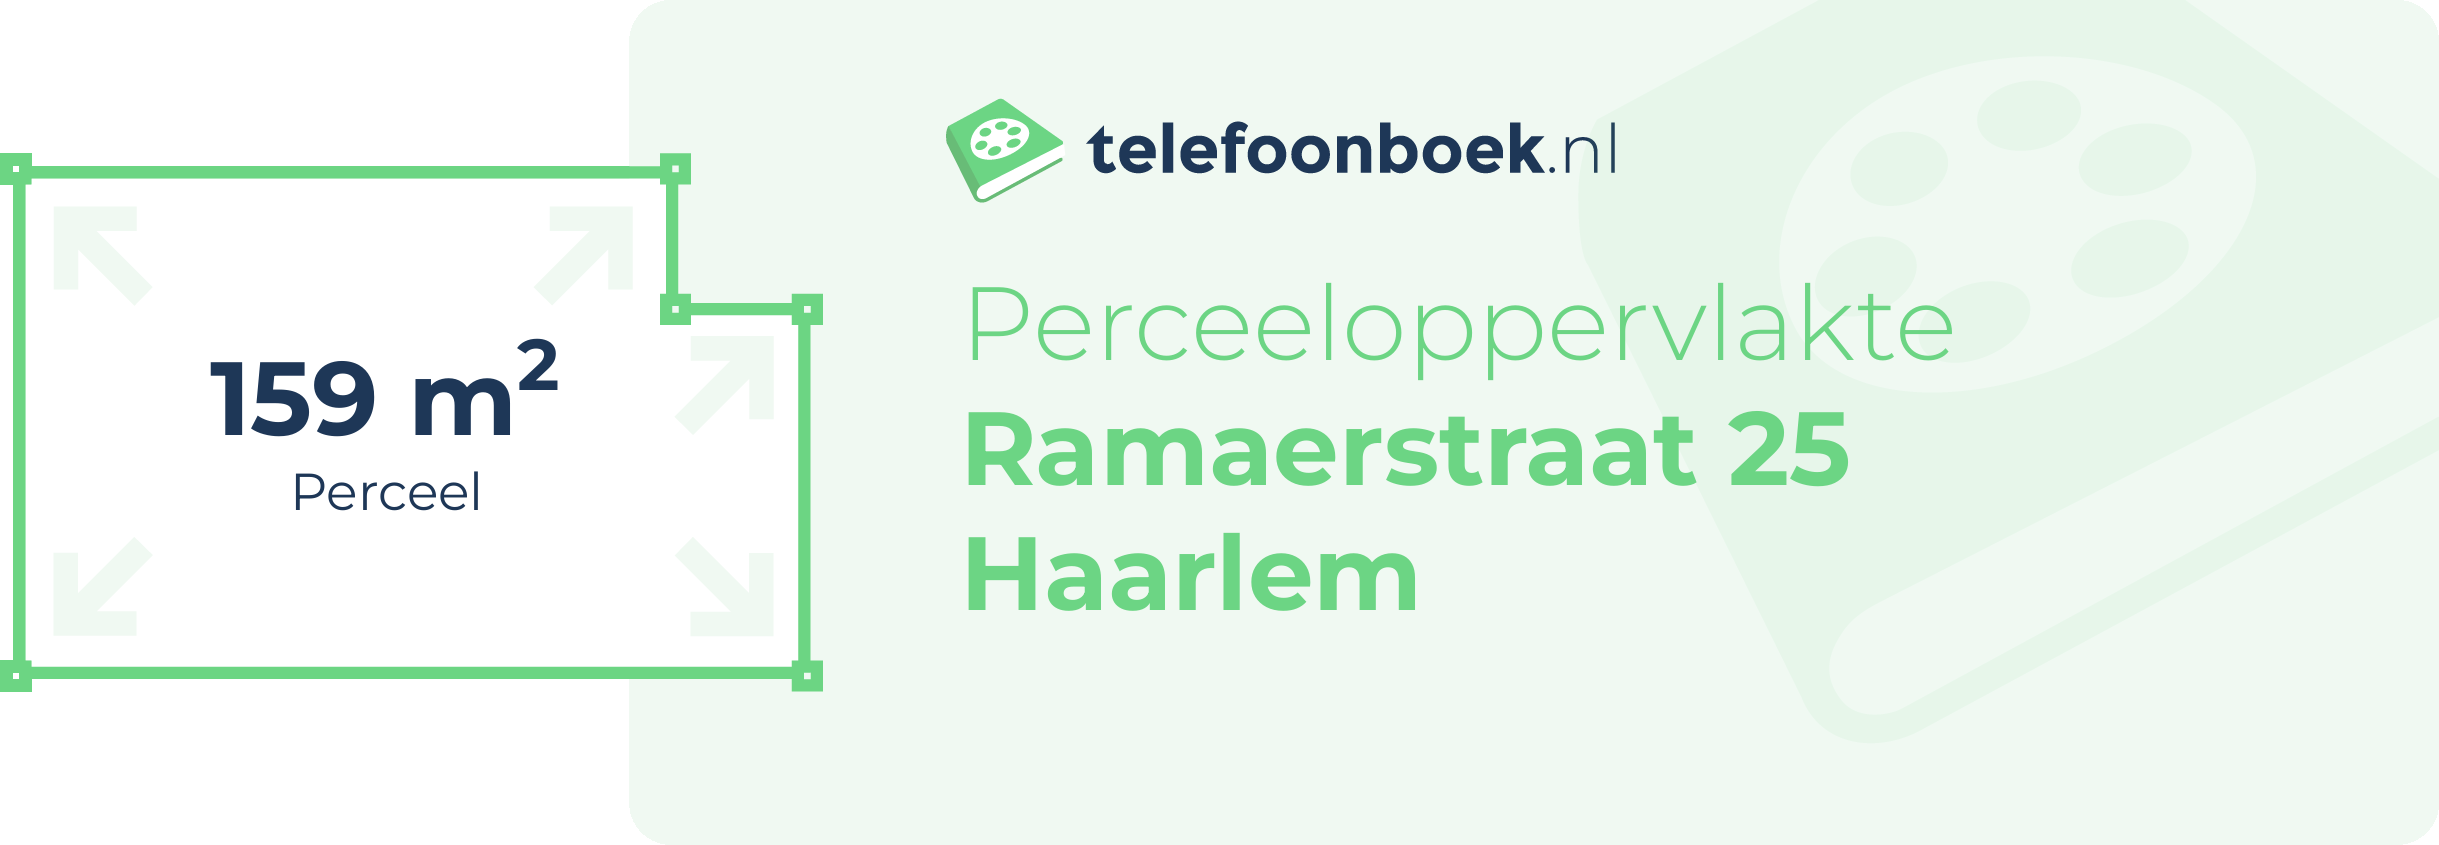 Perceeloppervlakte Ramaerstraat 25 Haarlem